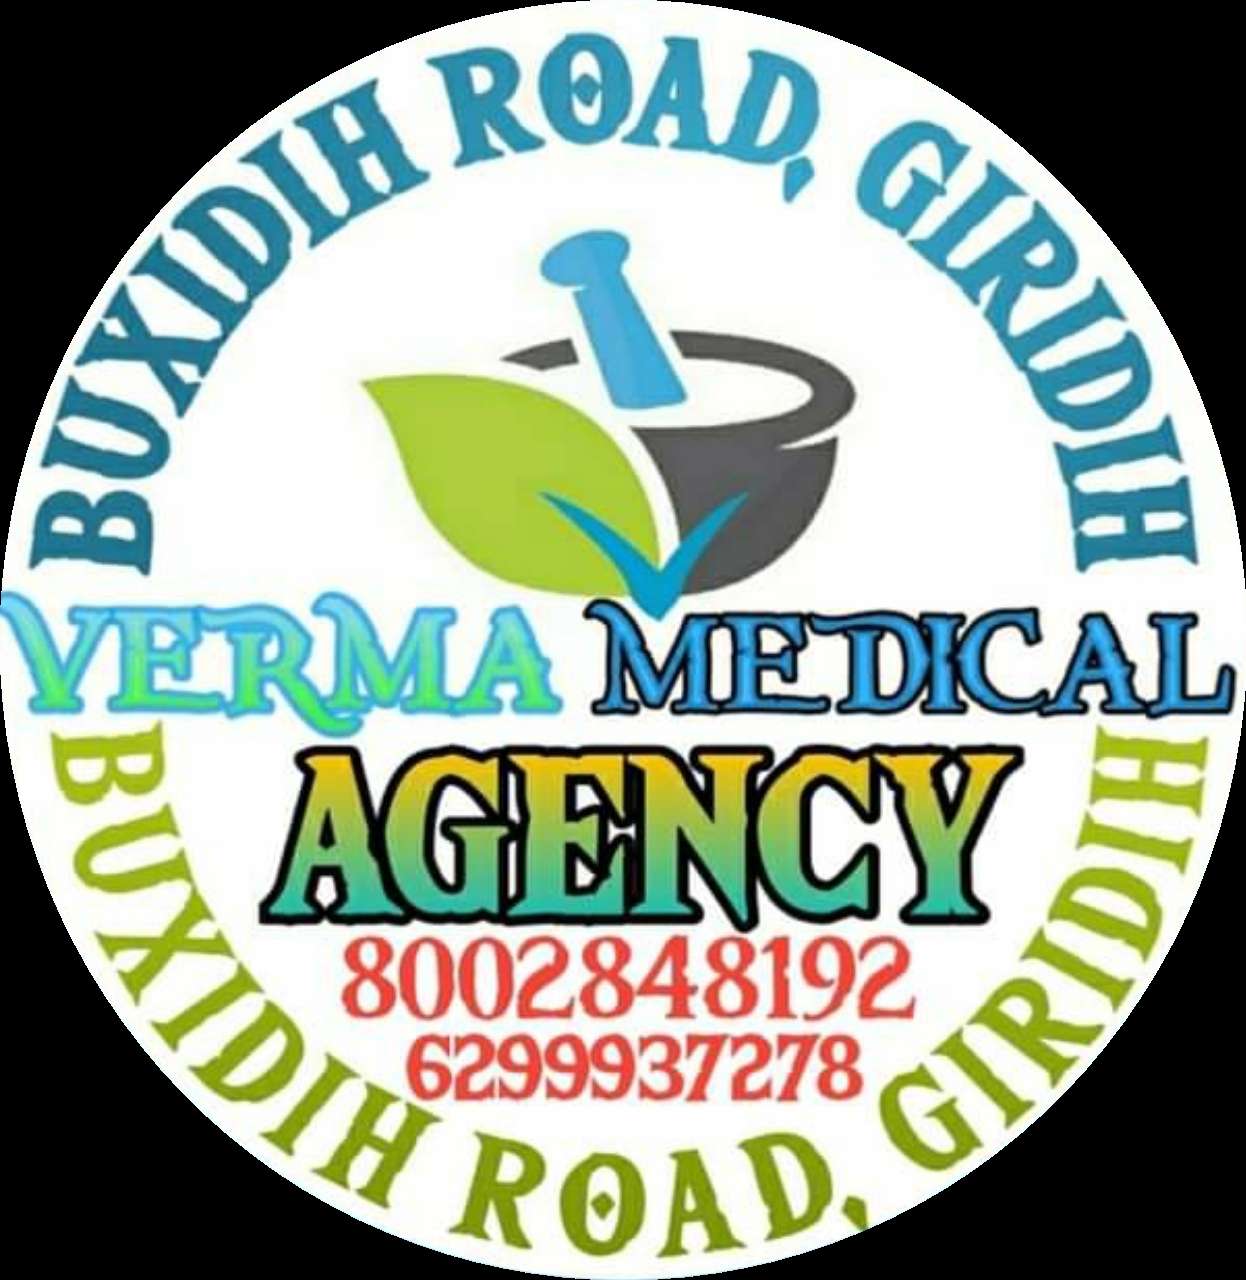 Verma Medical Agency Giridih